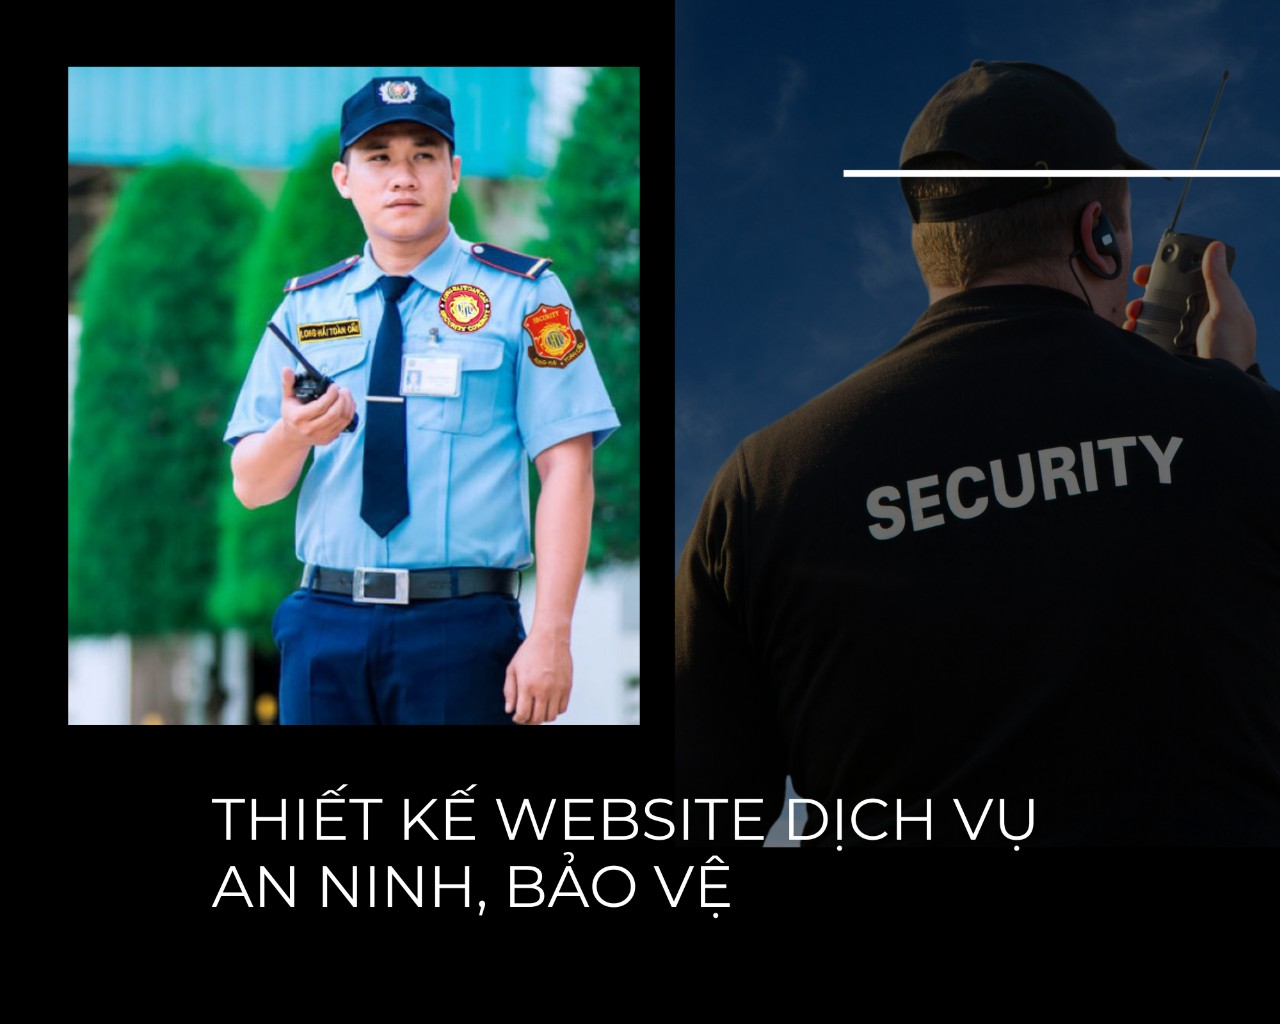 Thiết kế website an ninh, bảo vệ